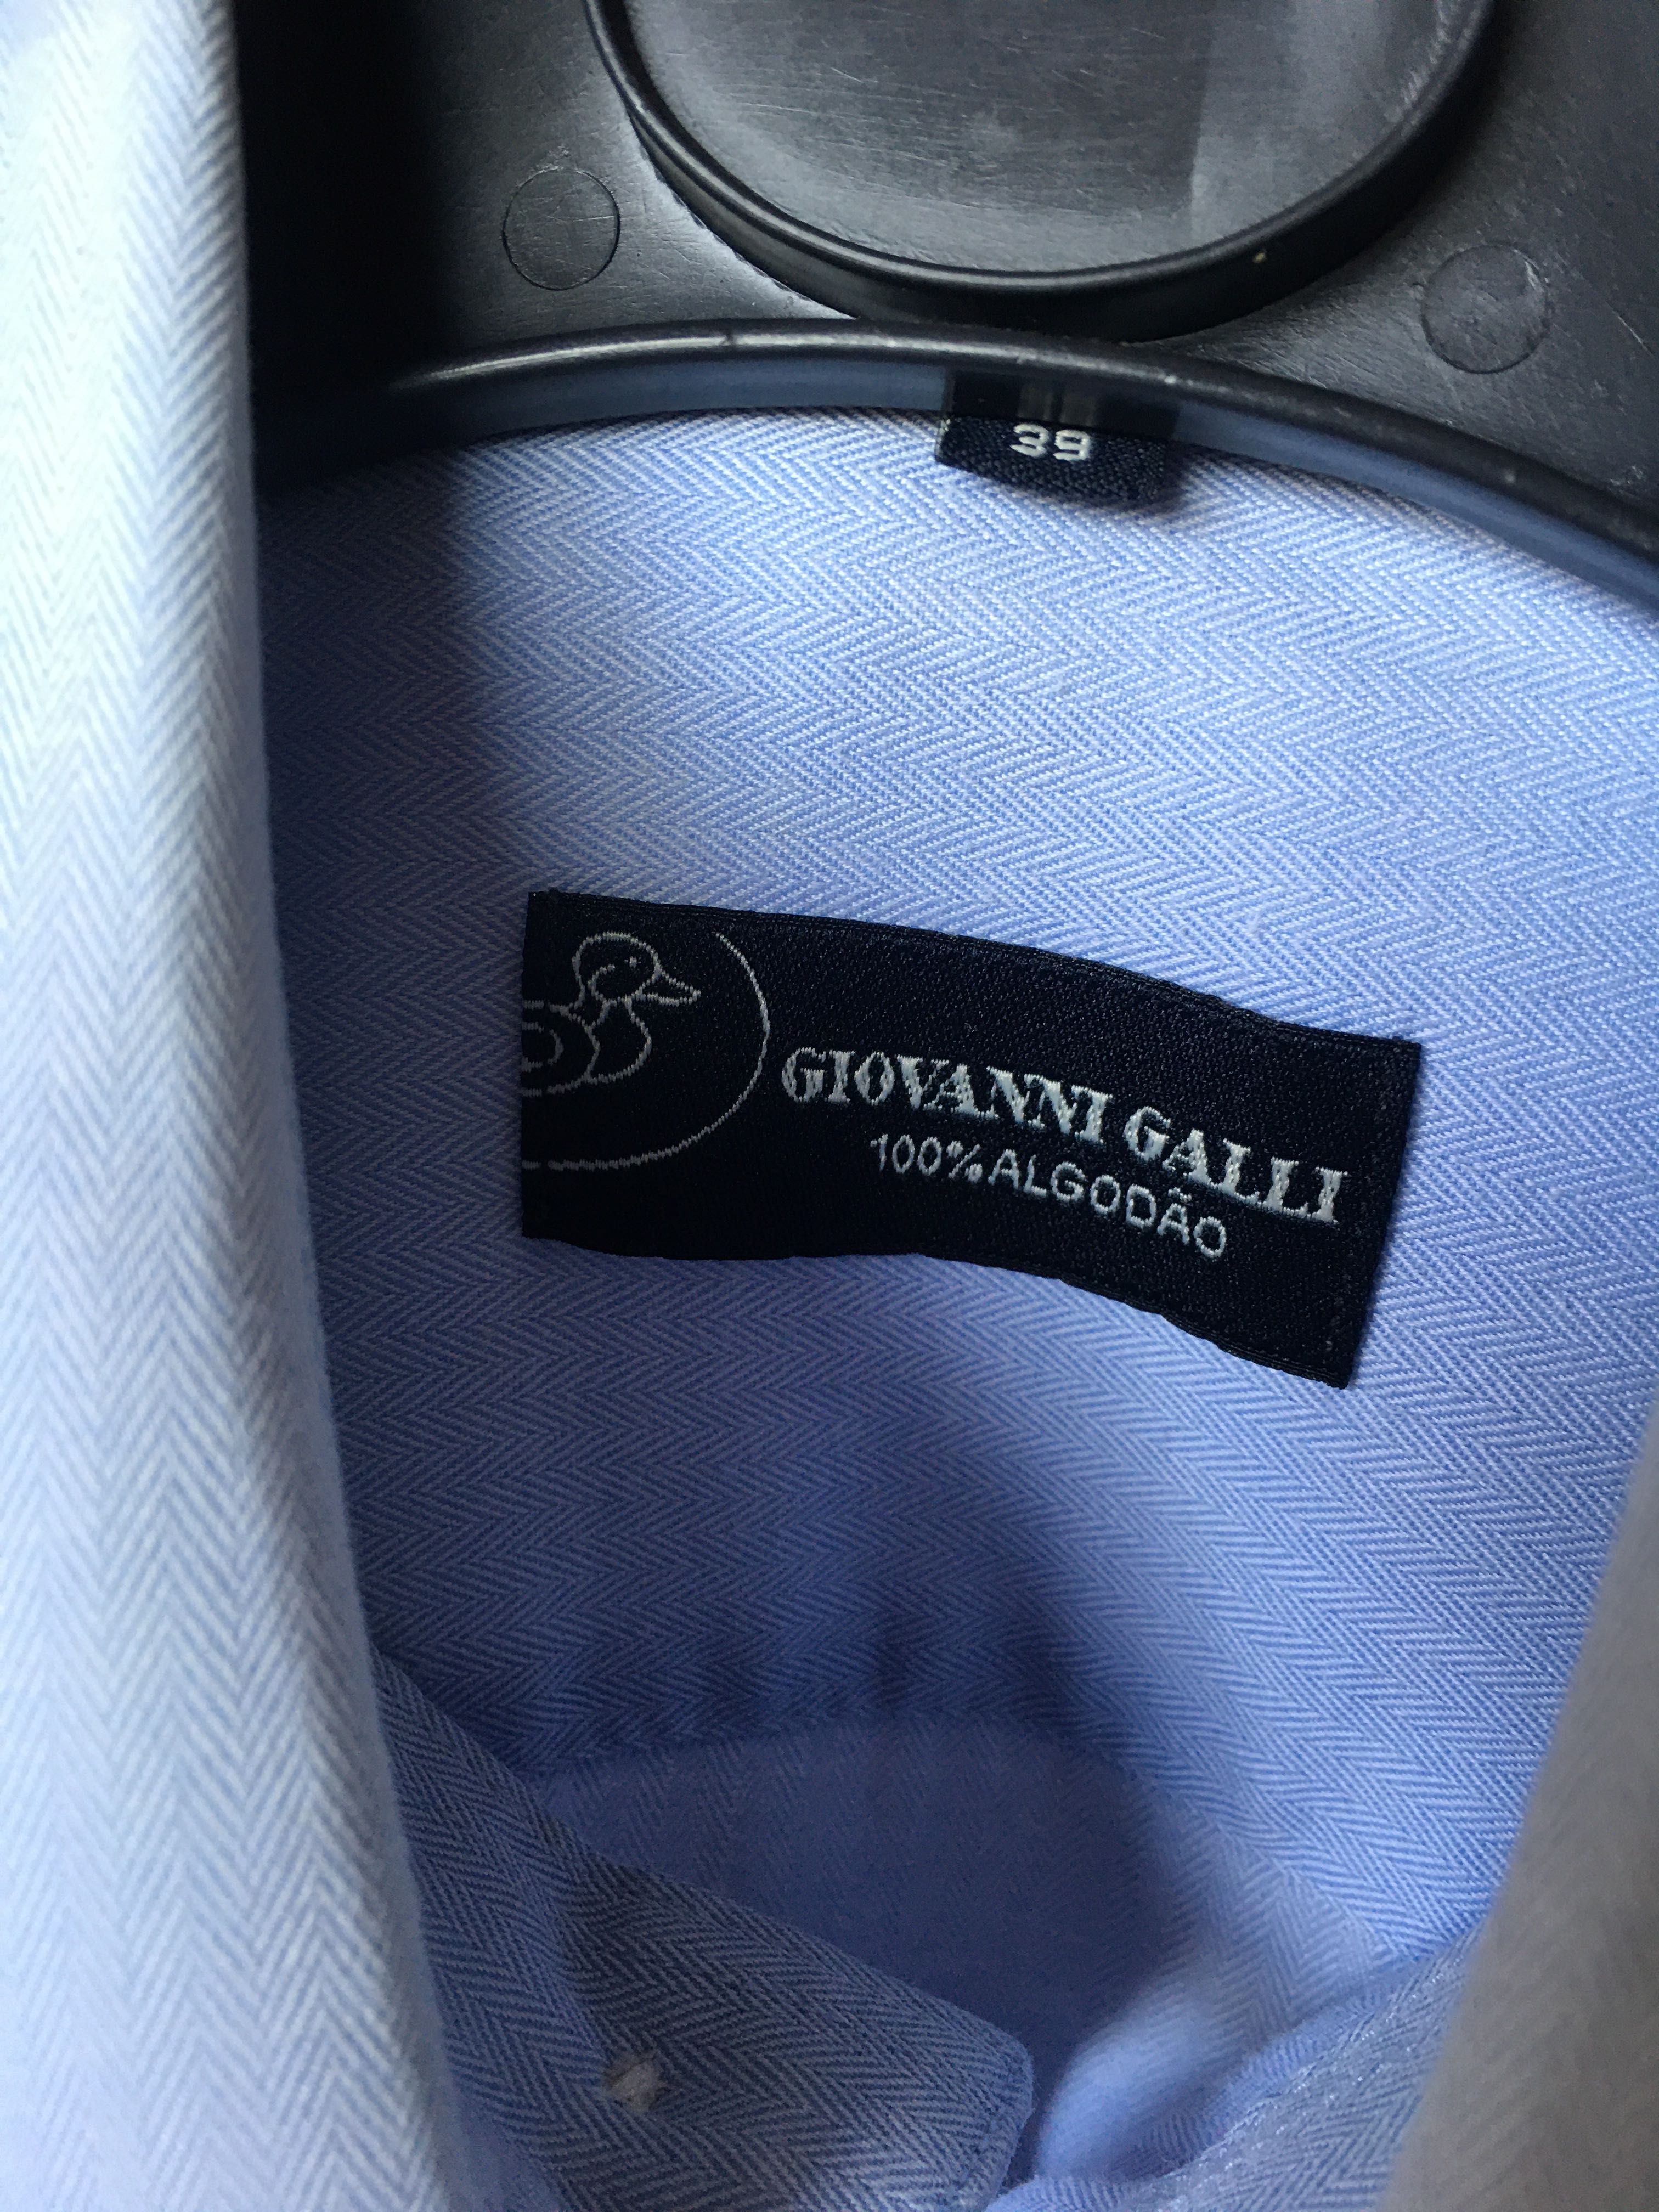 Camisas Giovanni Galli homem